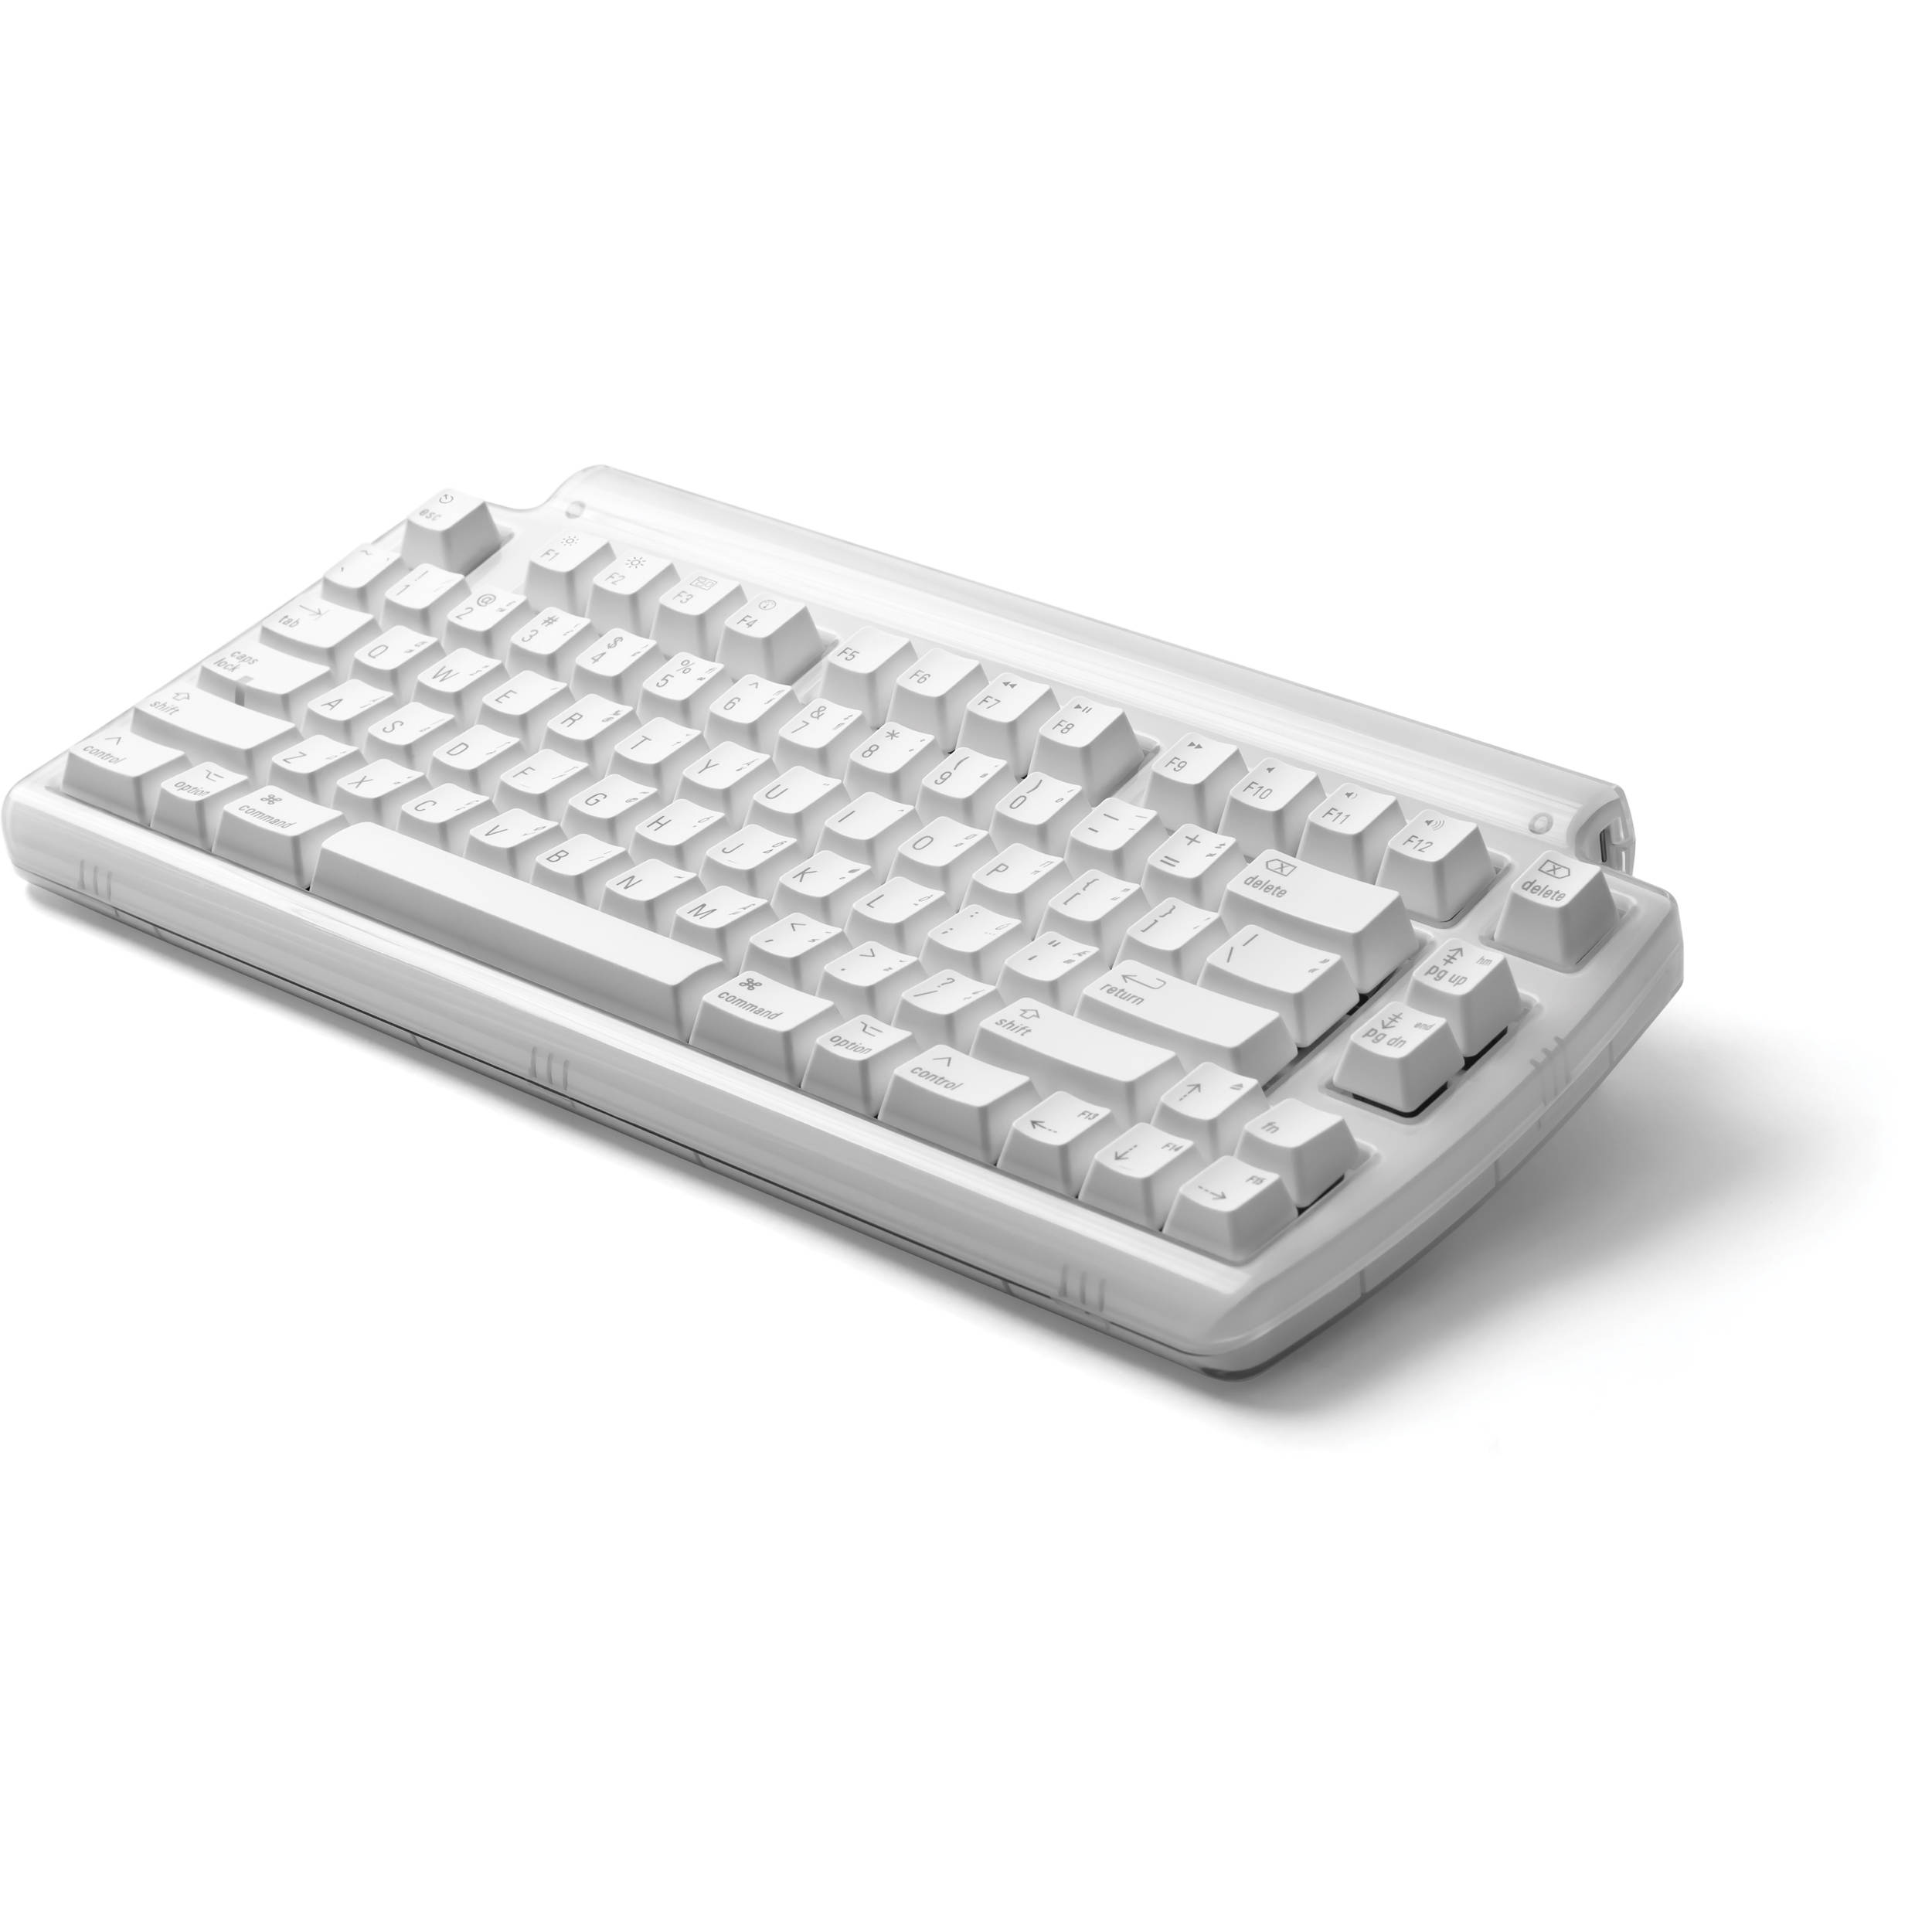 Matias Mac Tactile Pro Keyboard For Mac